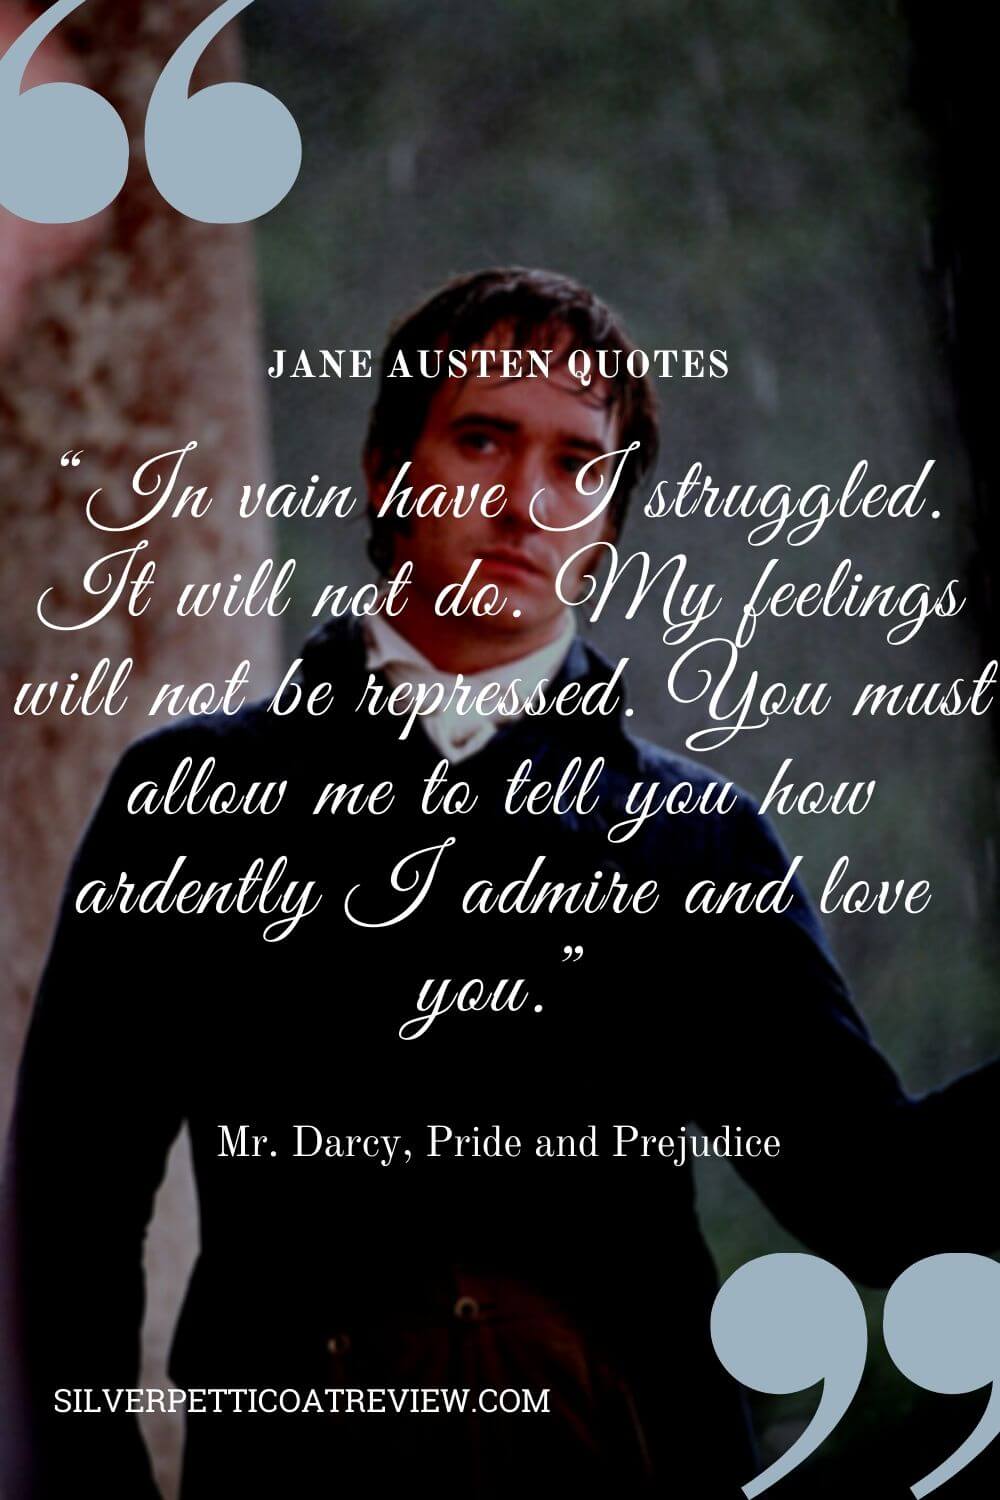 Pride and Prejudice quote; jane austen quotes about love